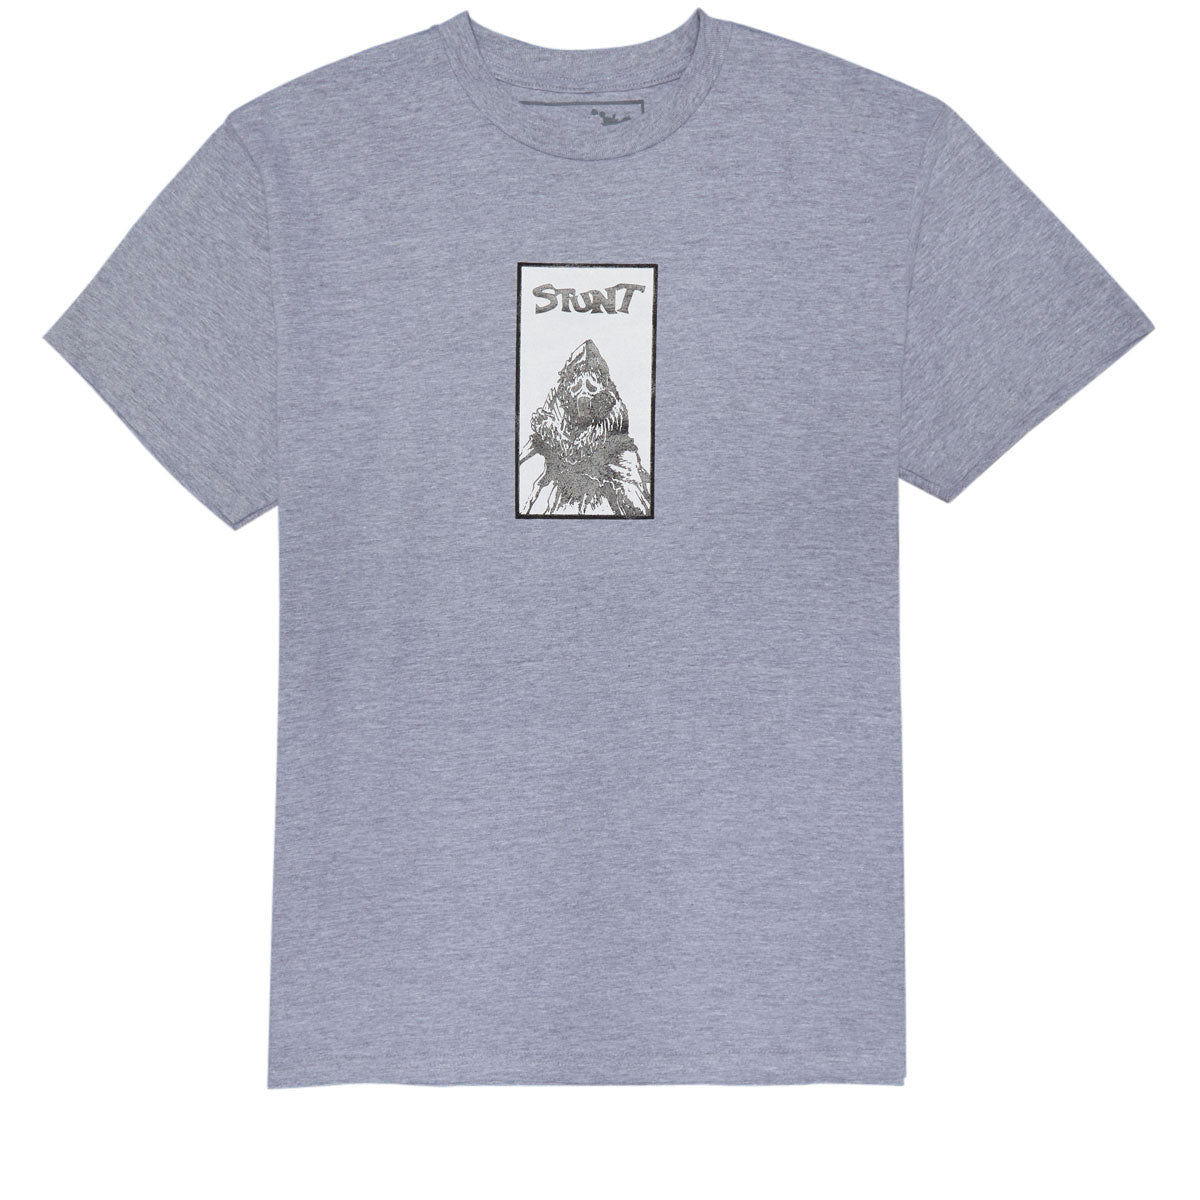 Stunt Ripper T-Shirt - Grey image 1